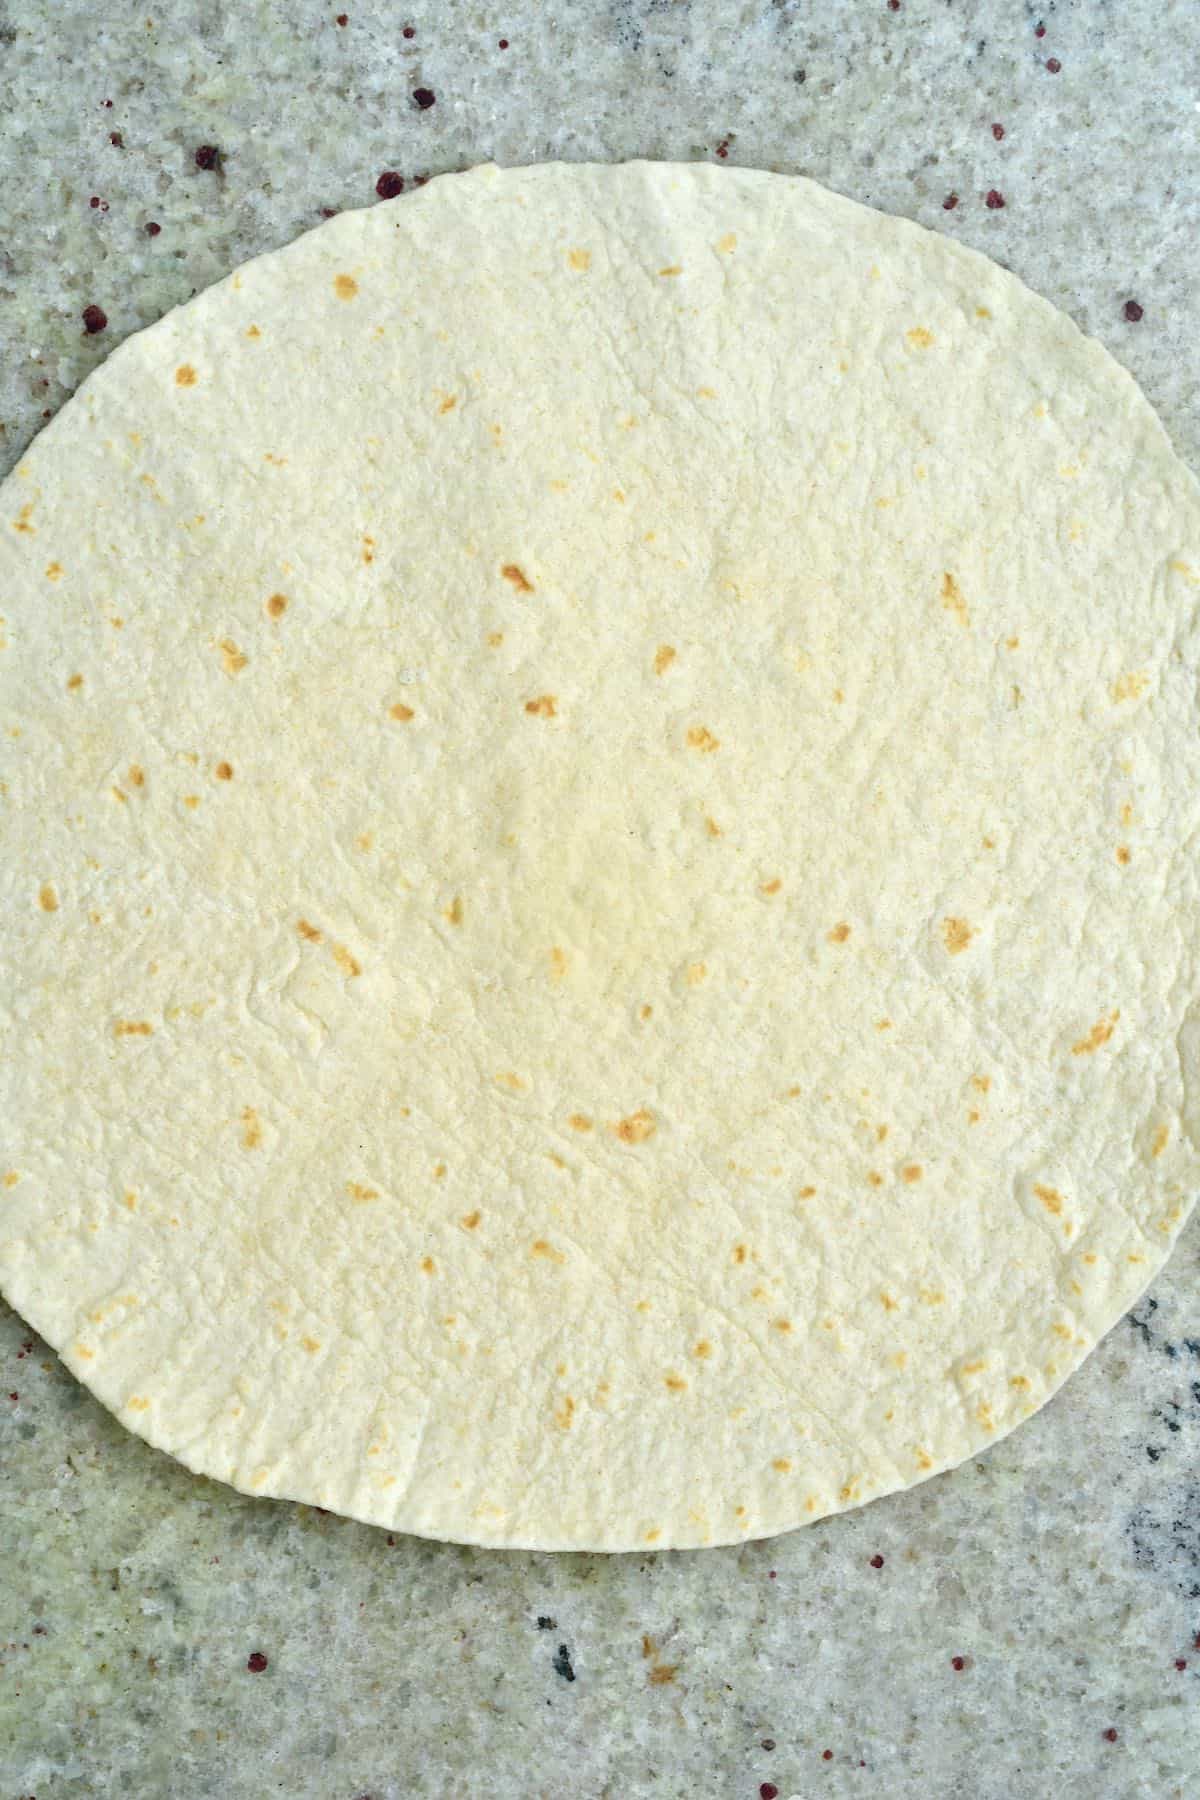 A tortilla on a flat grey surface